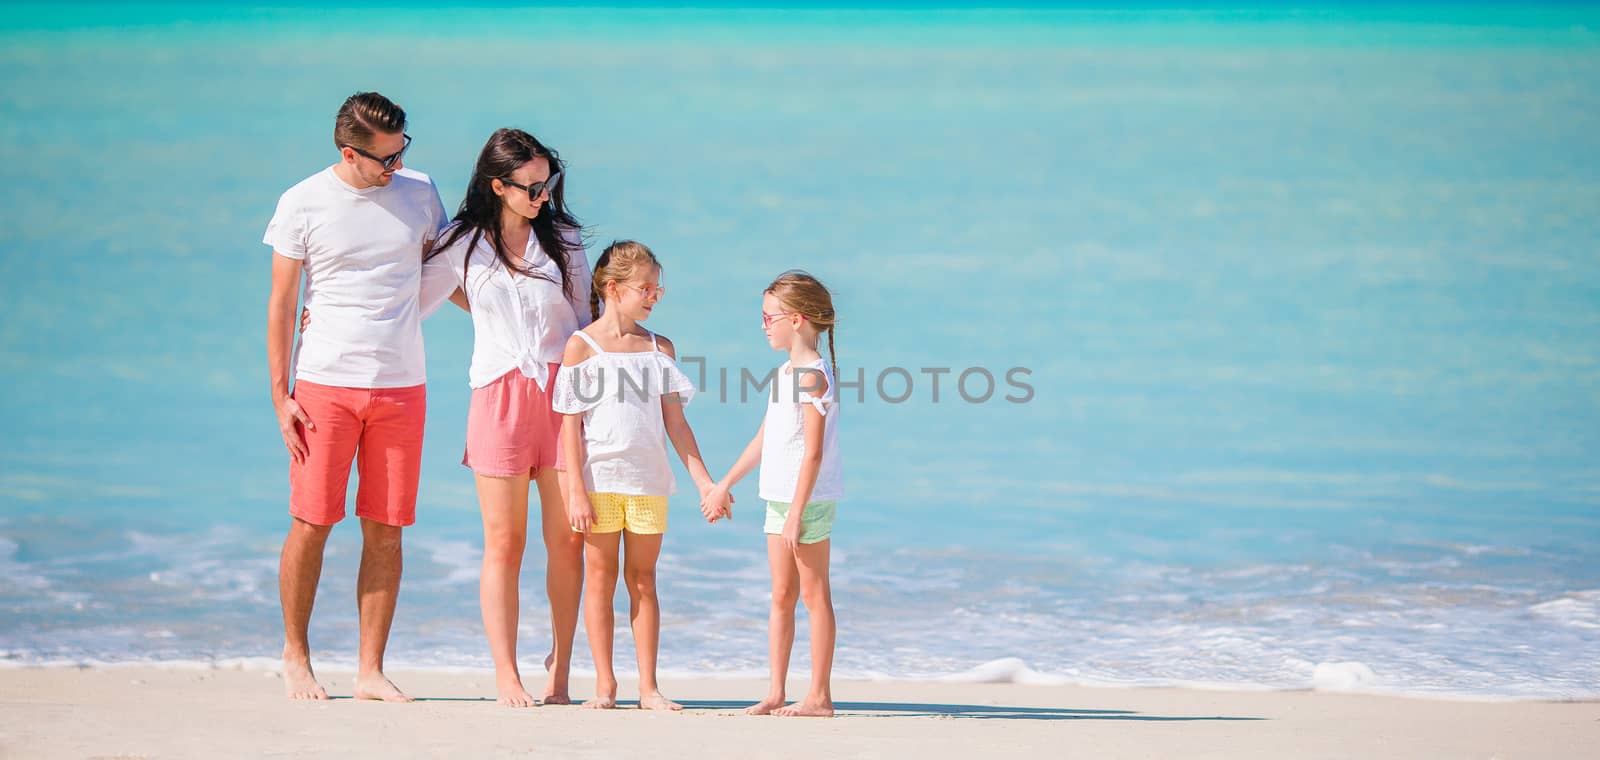 Panorama of family on beach holiday by travnikovstudio